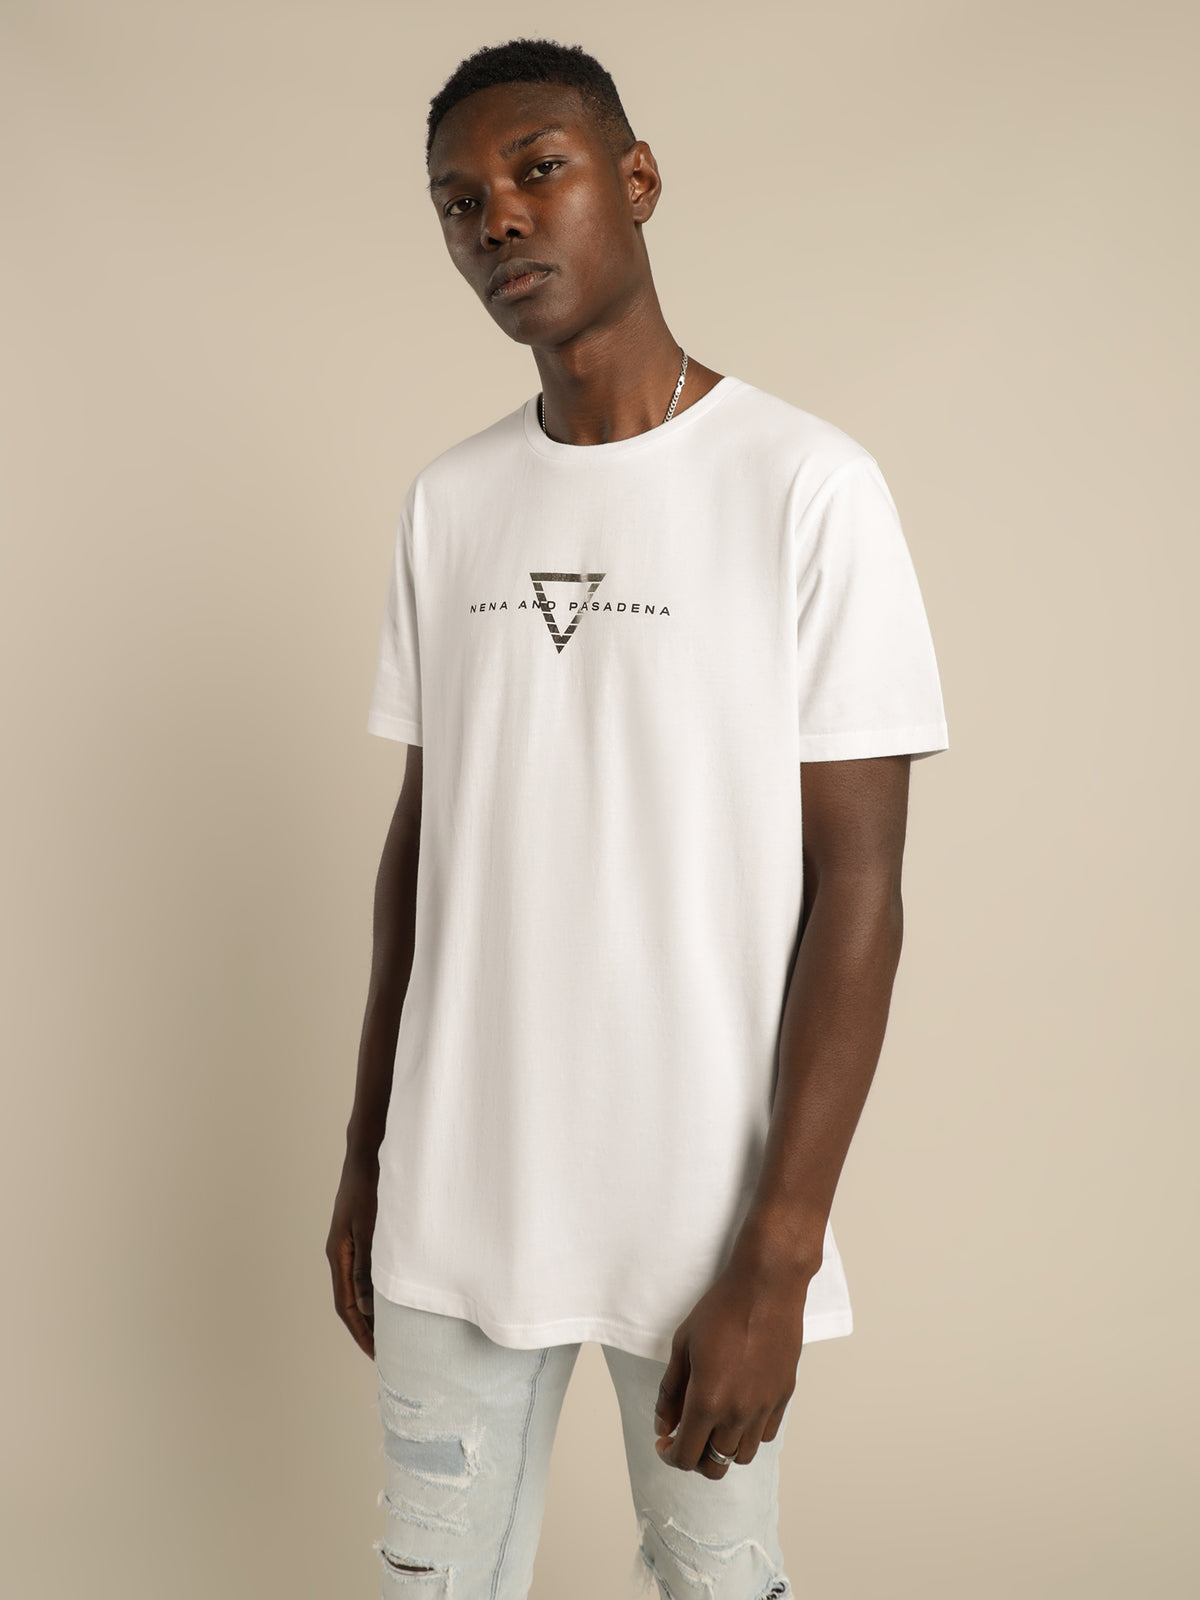 Oblivion Cape Back T-Shirt in White